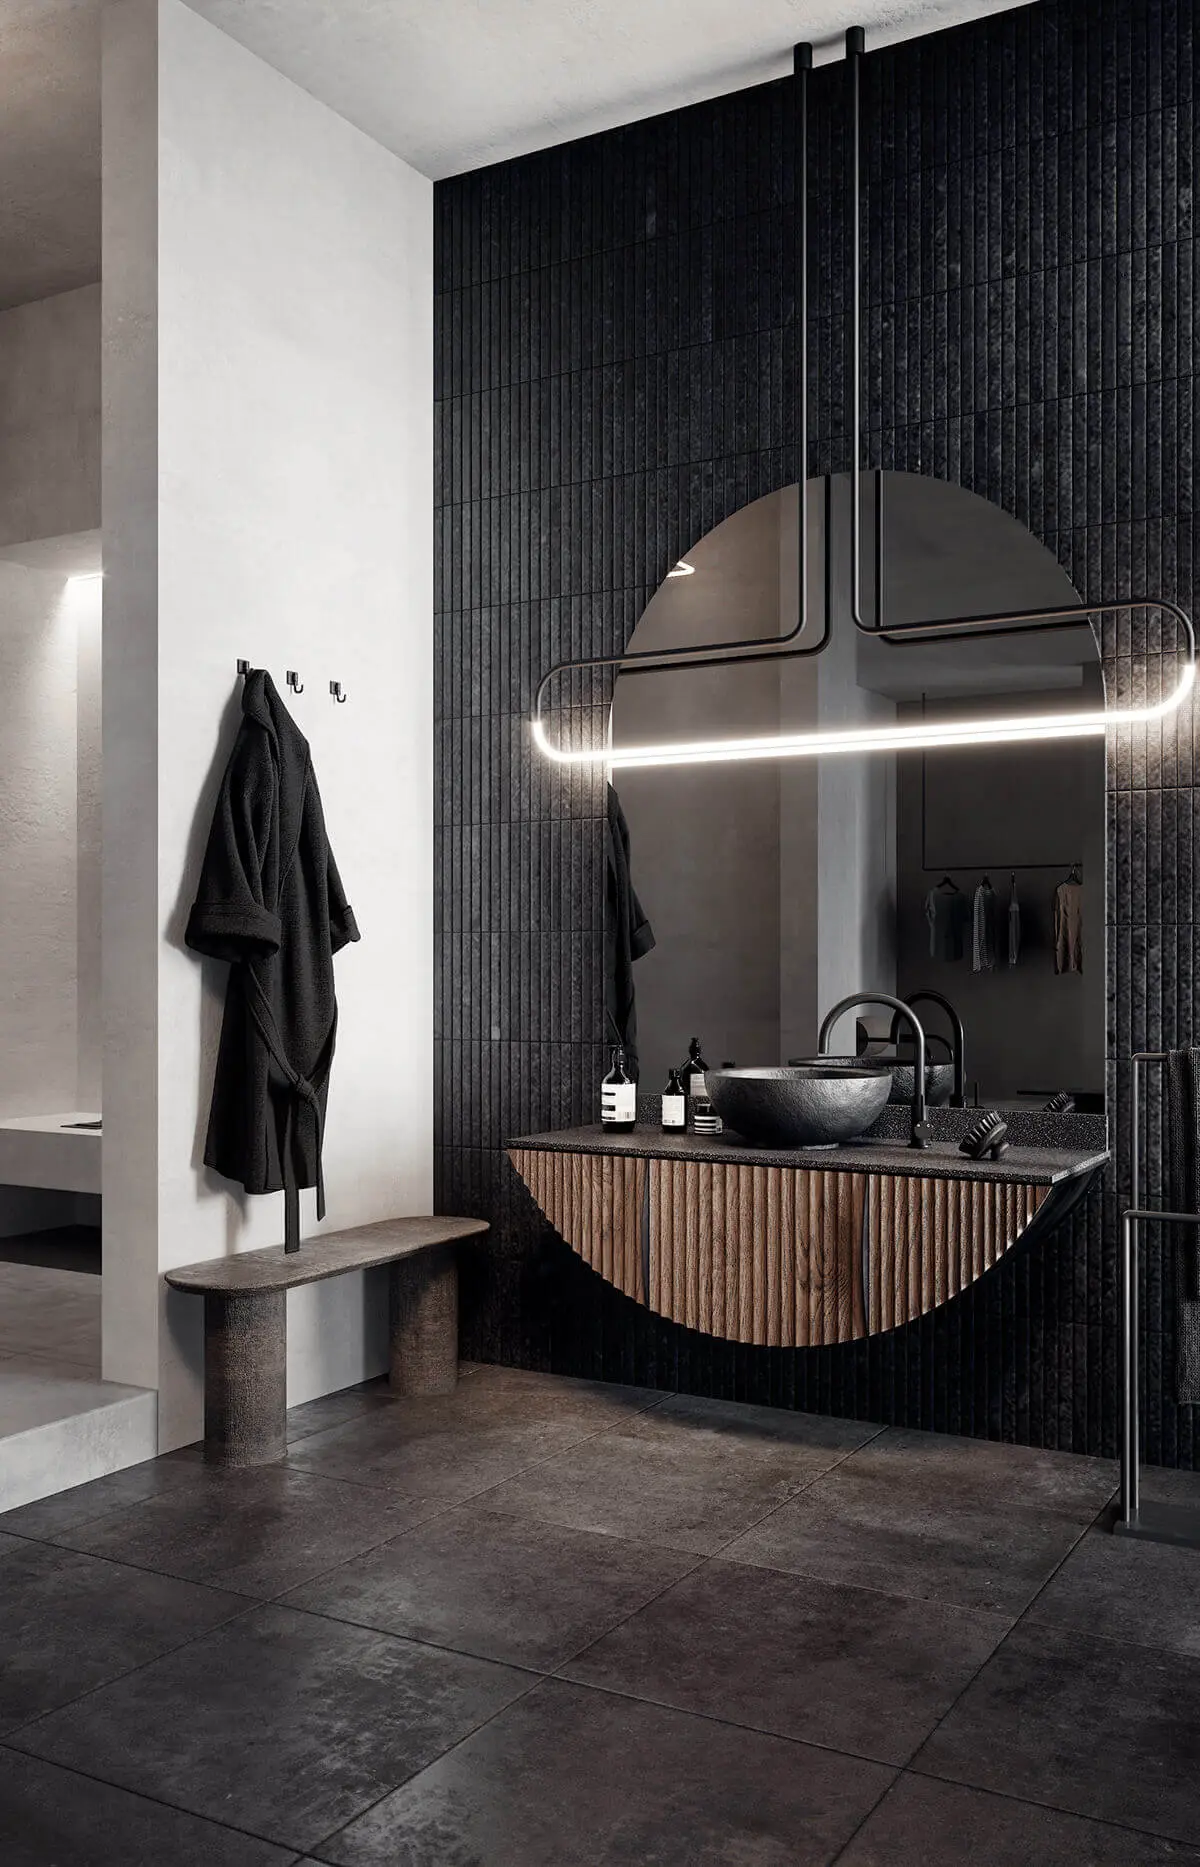 Silence - bathroom material juxtaposition by Roman Protopopov